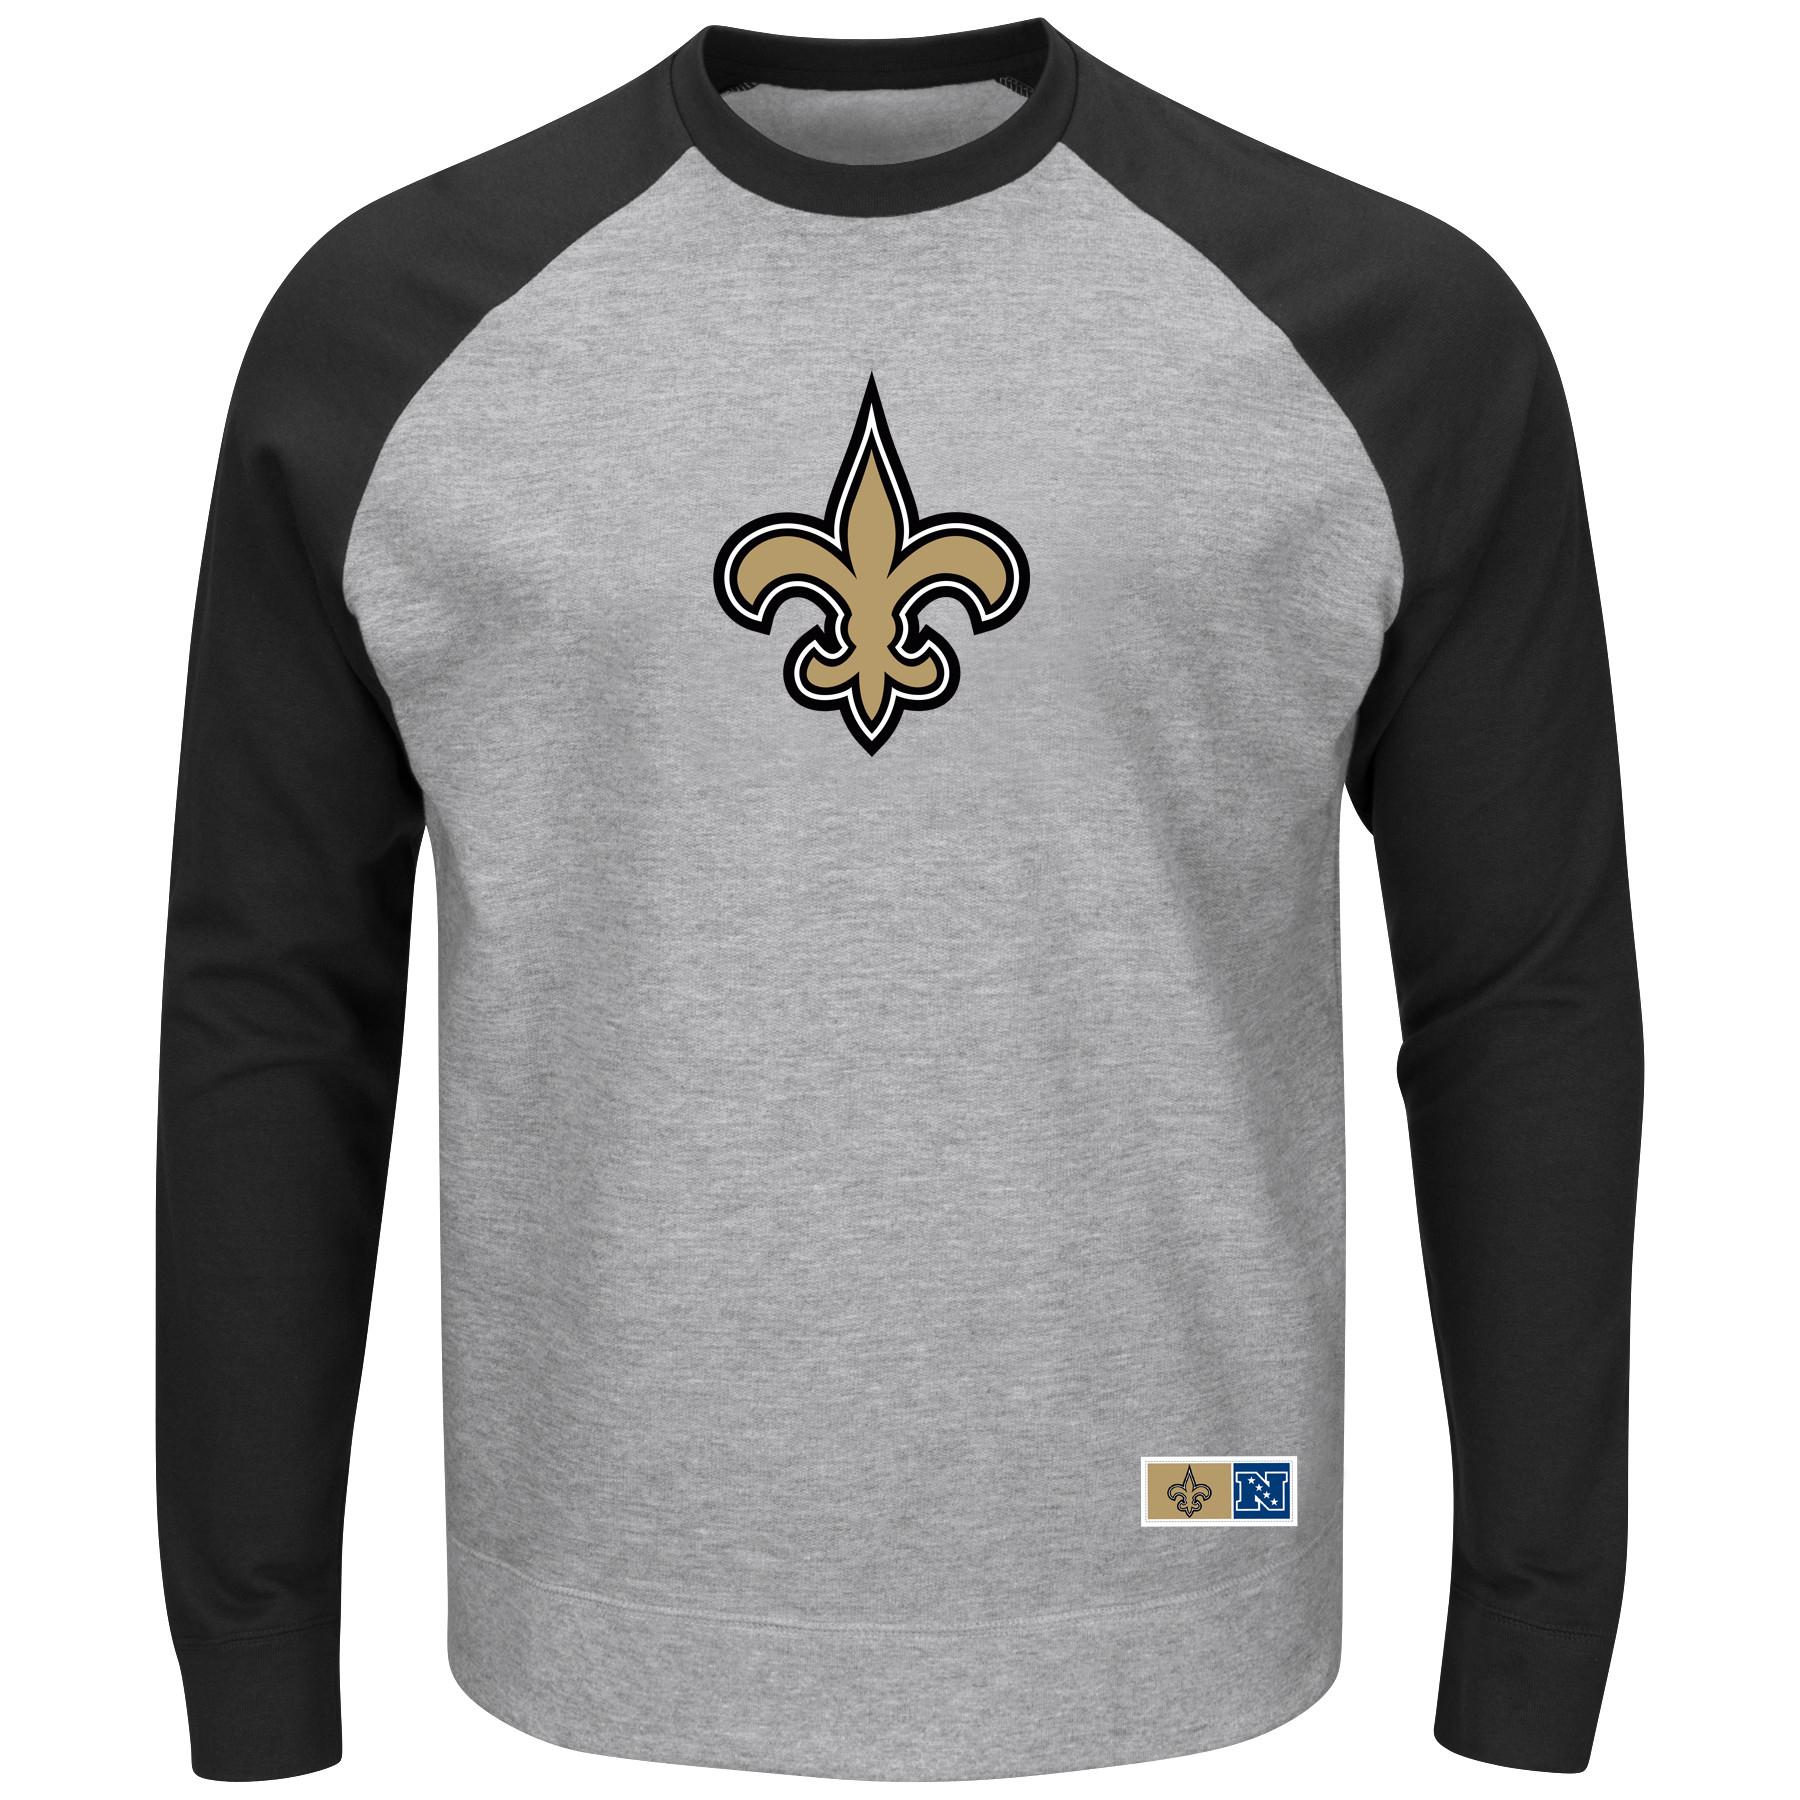 NFL Men's Big & Tall Sweatshirt - New Orleans Saints